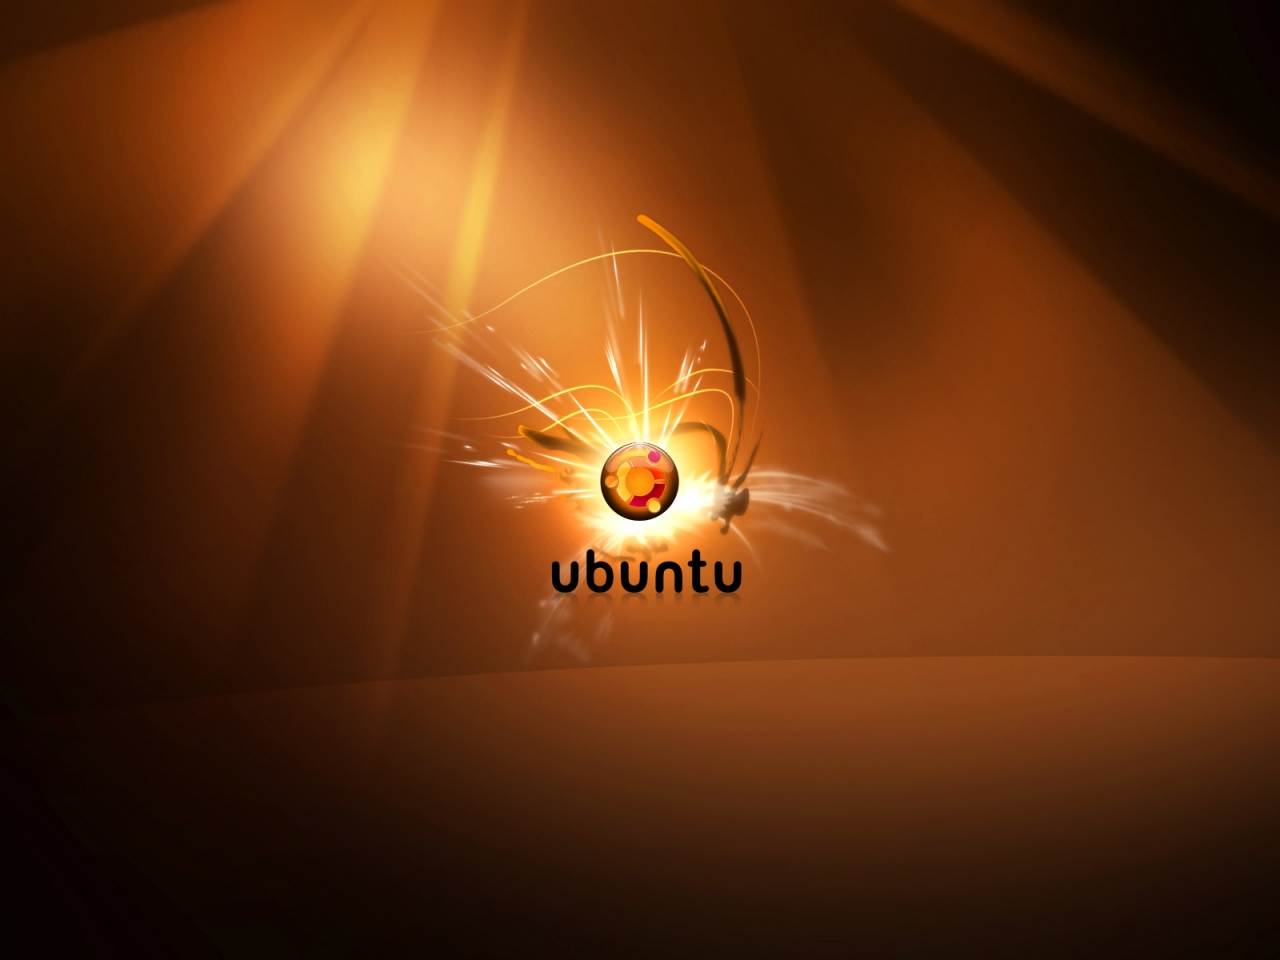 Creative Ubuntu Design for 1280 x 960 resolution